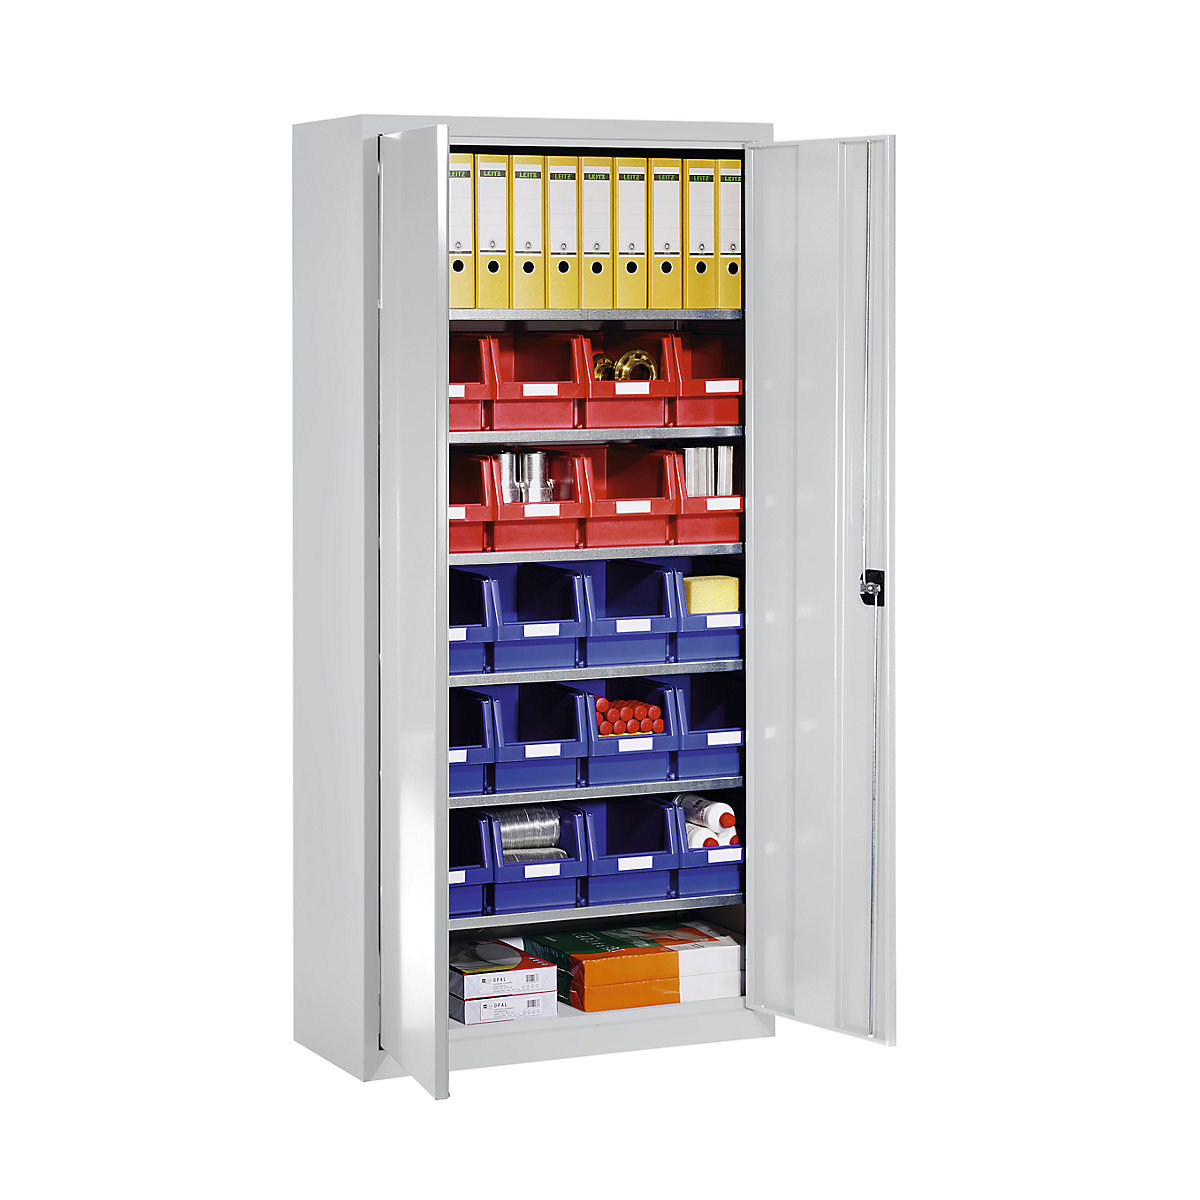 Storage cupboard made of sheet steel – eurokraft pro, with 20 open fronted storage bins, gentian blue RAL 5010-5